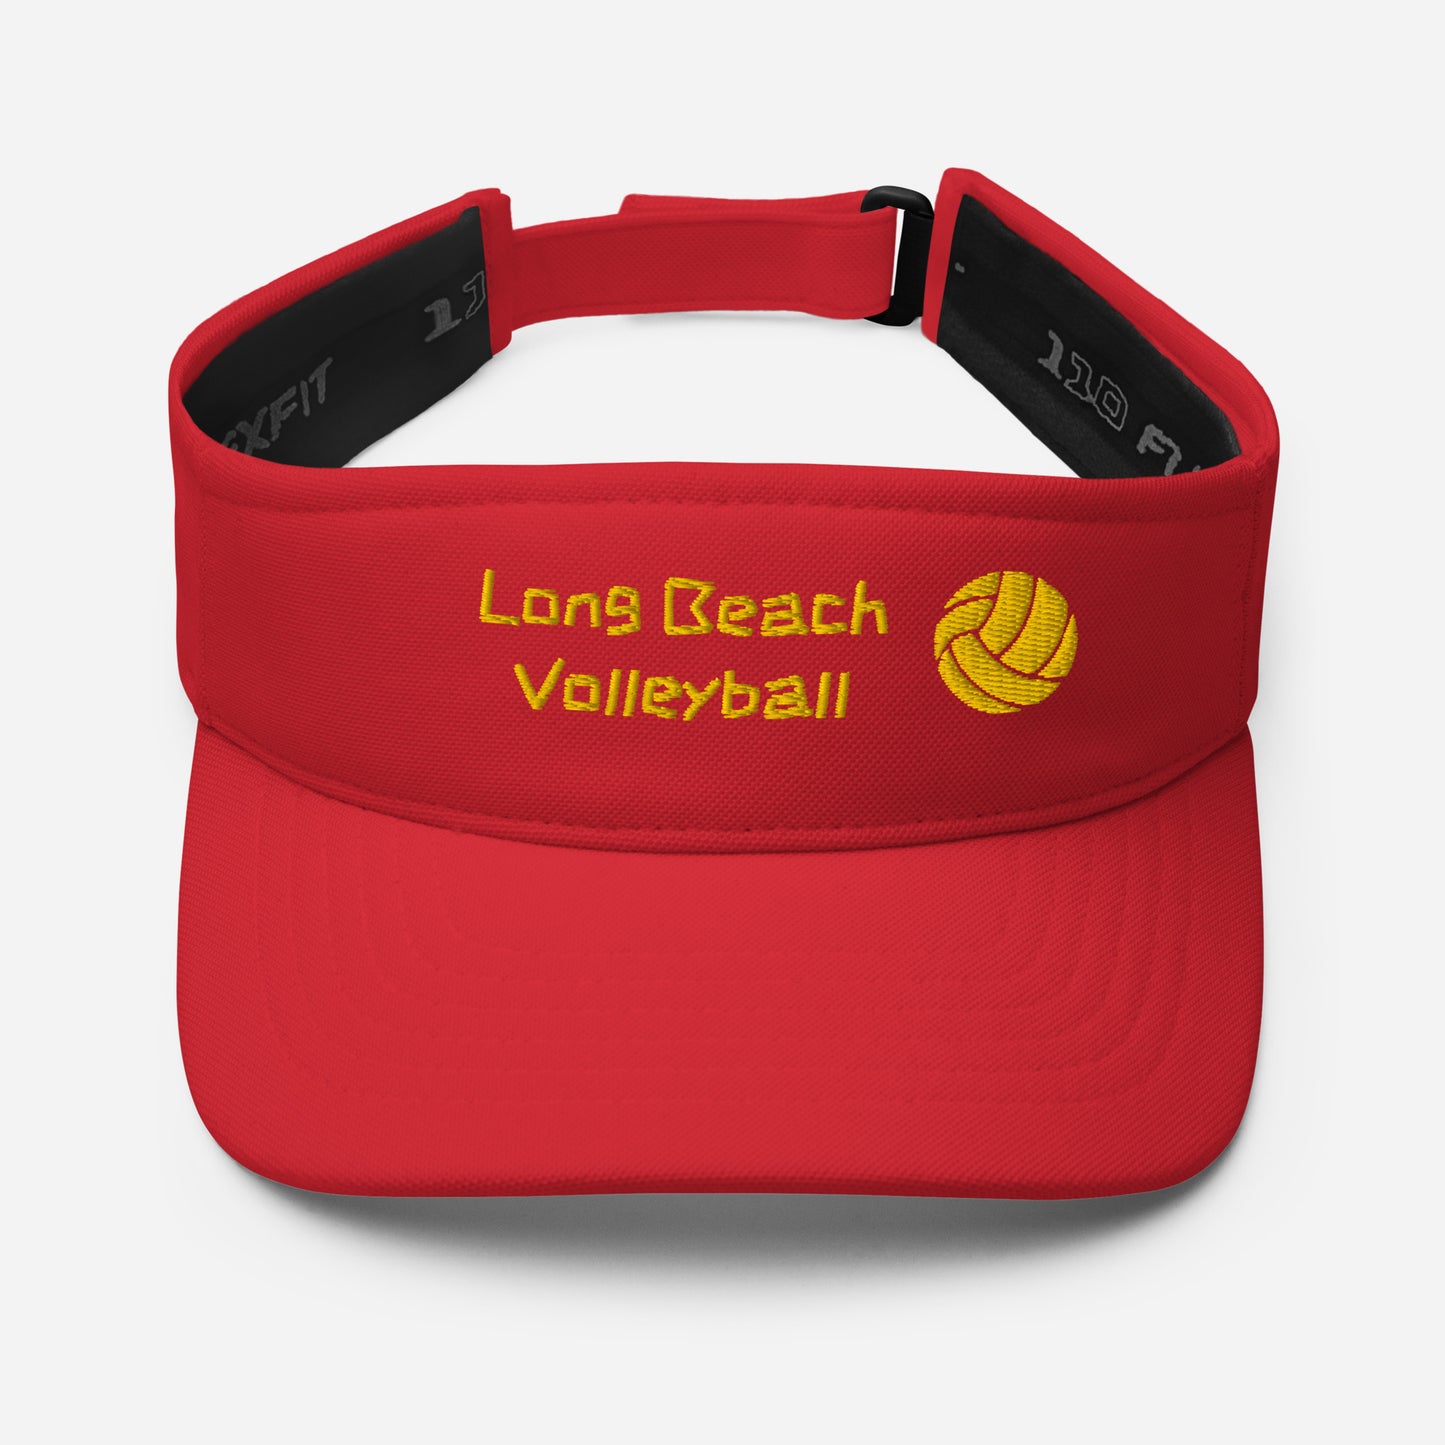 Long Beach - Volleyball - Sports - California - Visor